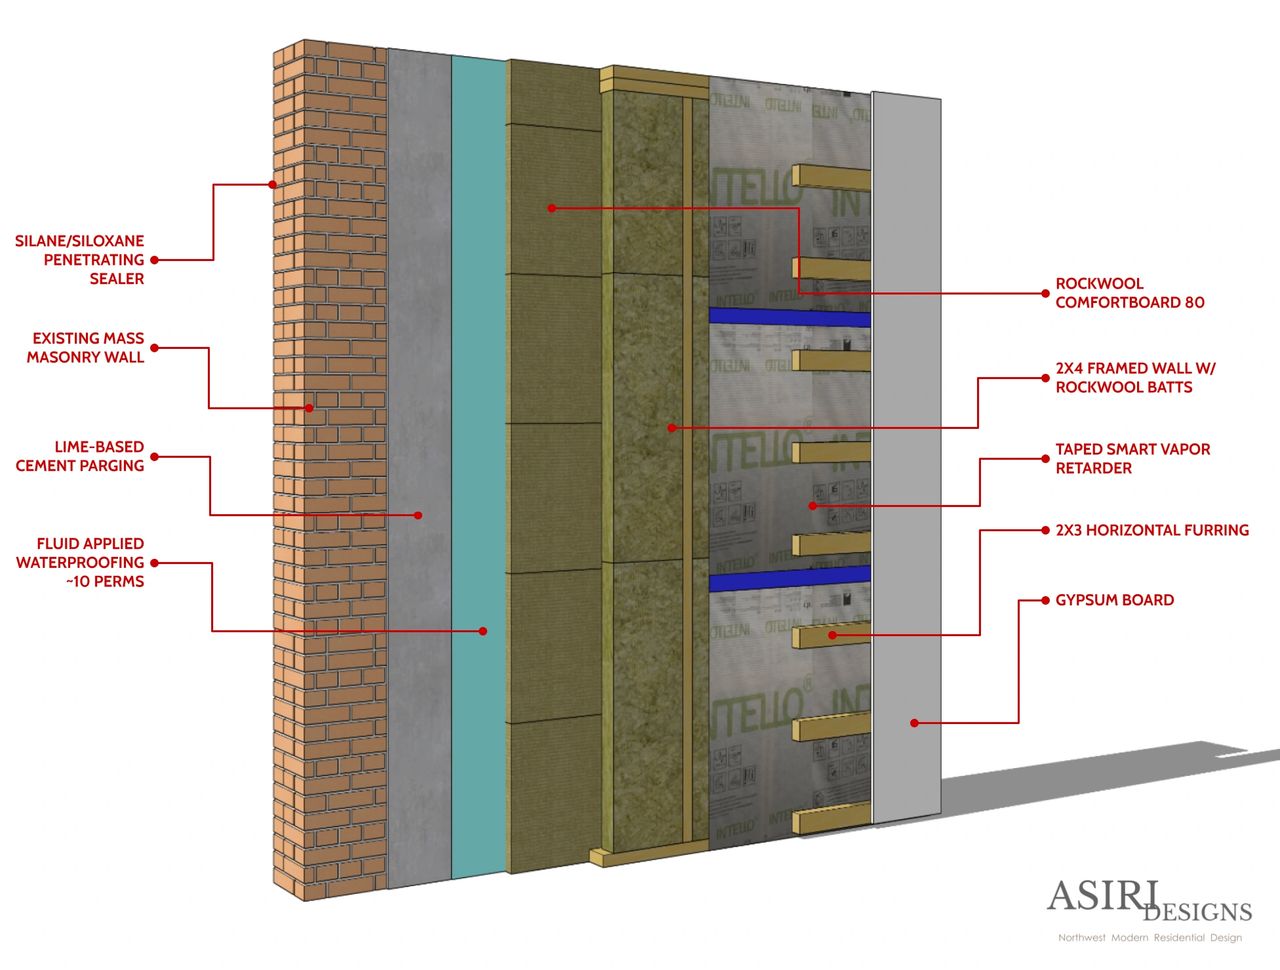 Rockwool insulation vapor barrier inside chimney